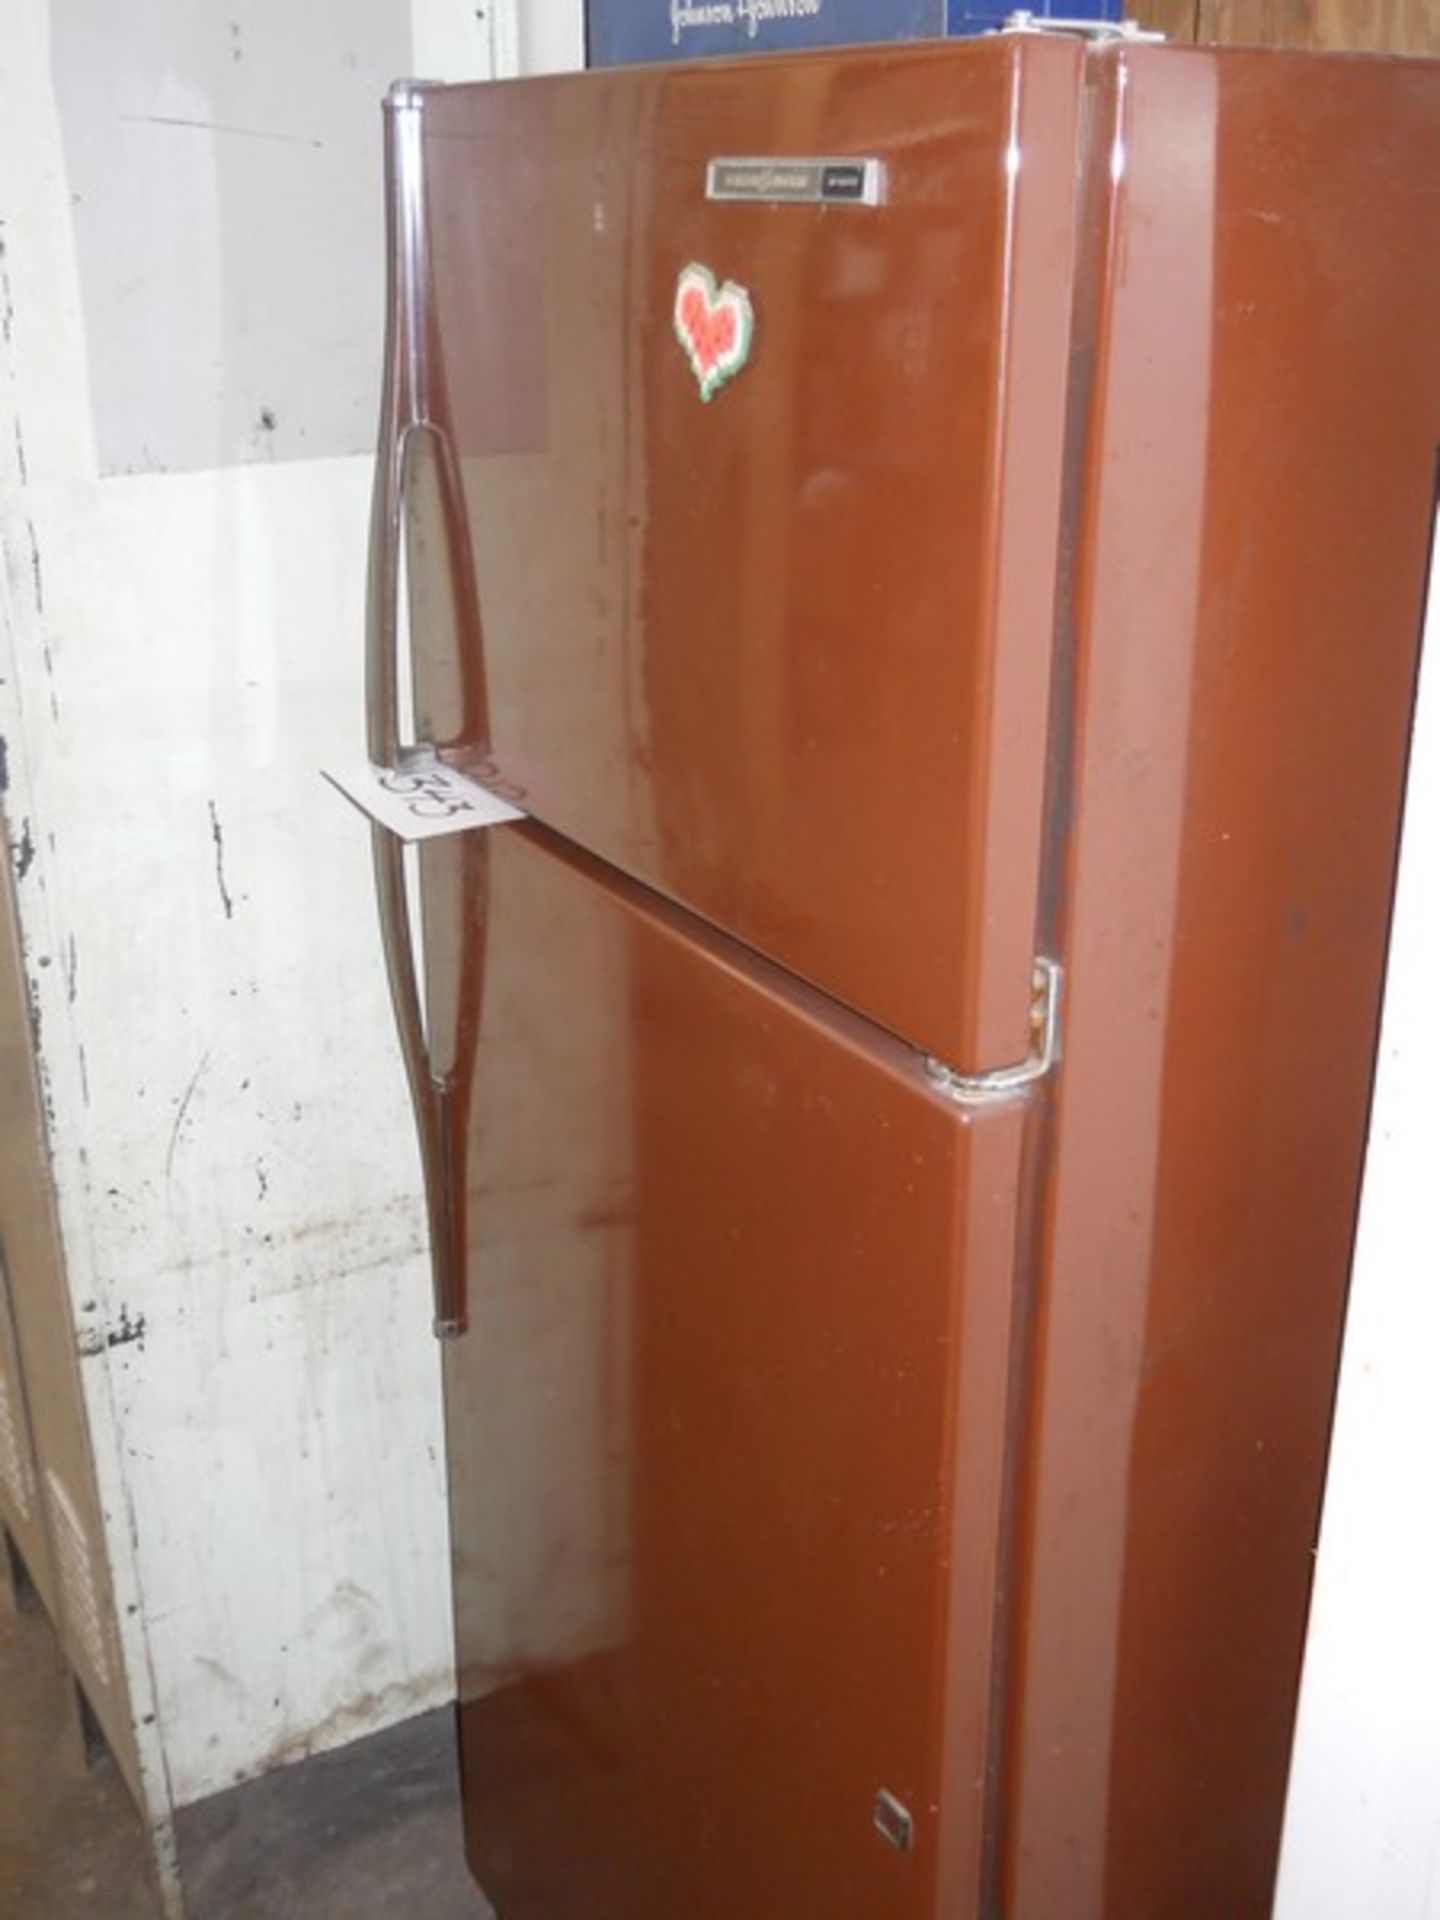 Shop Refrigerator - Image 2 of 5